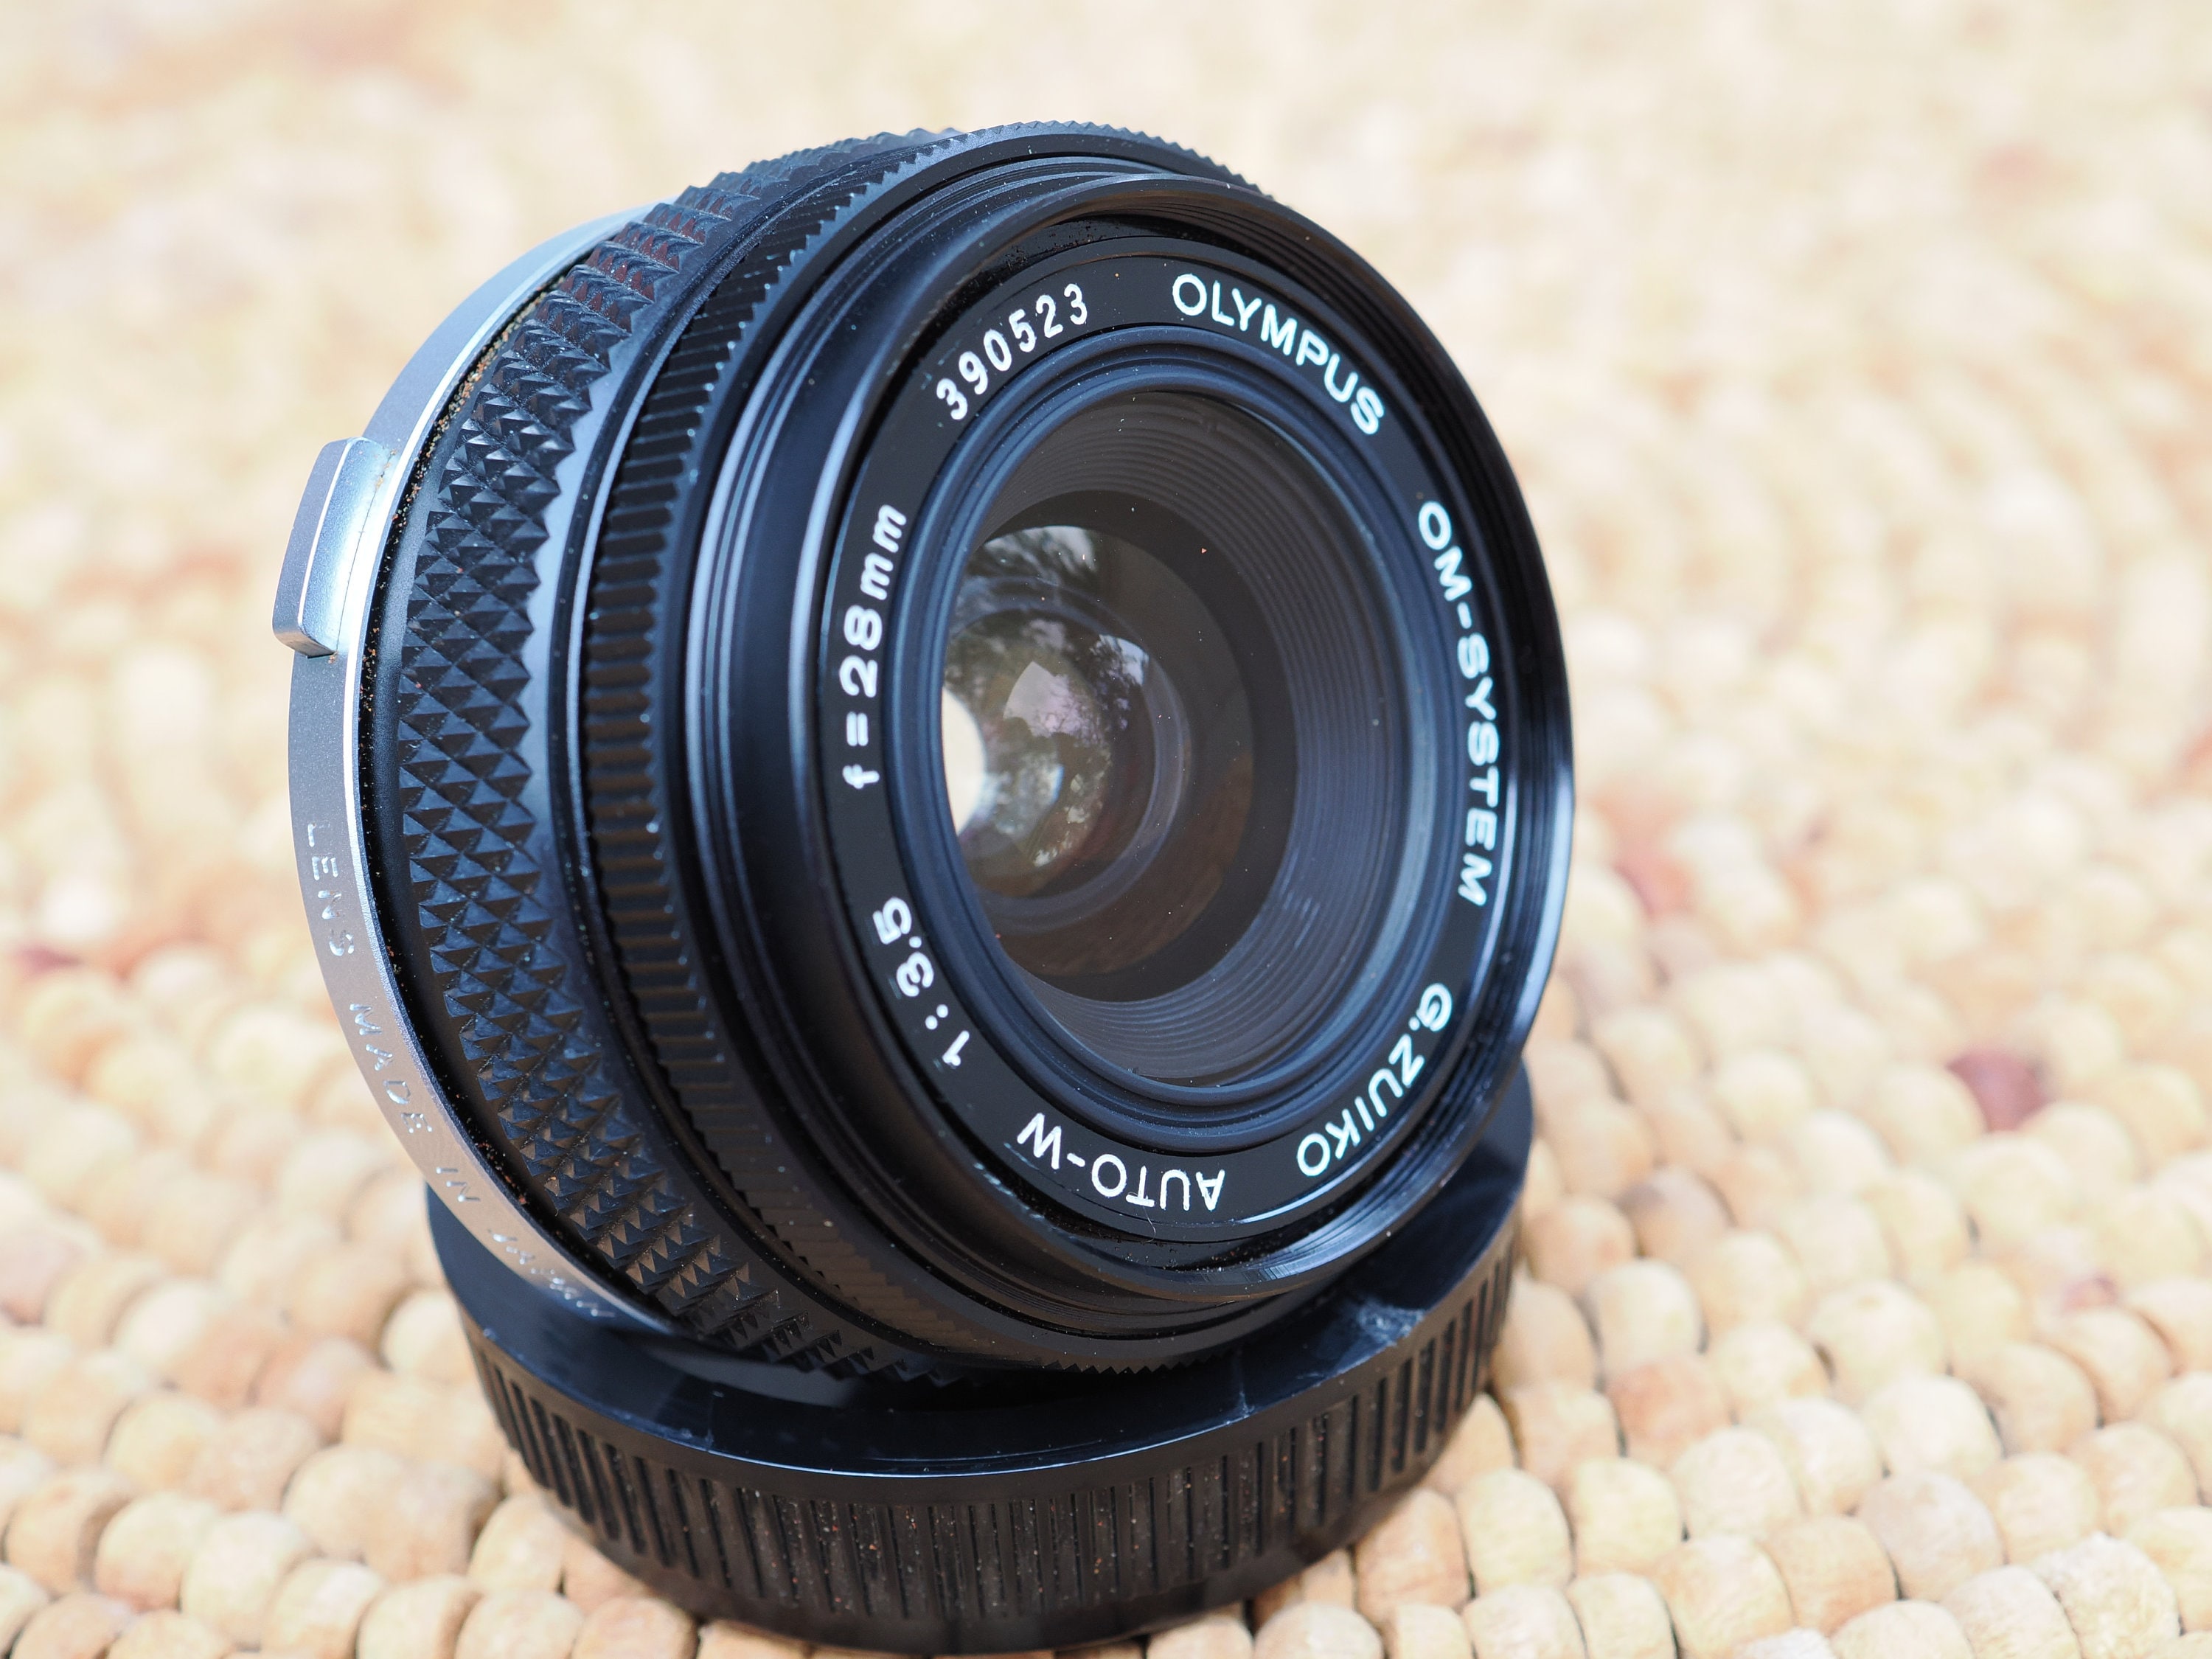 Olympus Zuiko 28mm F3.5 Wide Angle Lens for OM Film Cameras